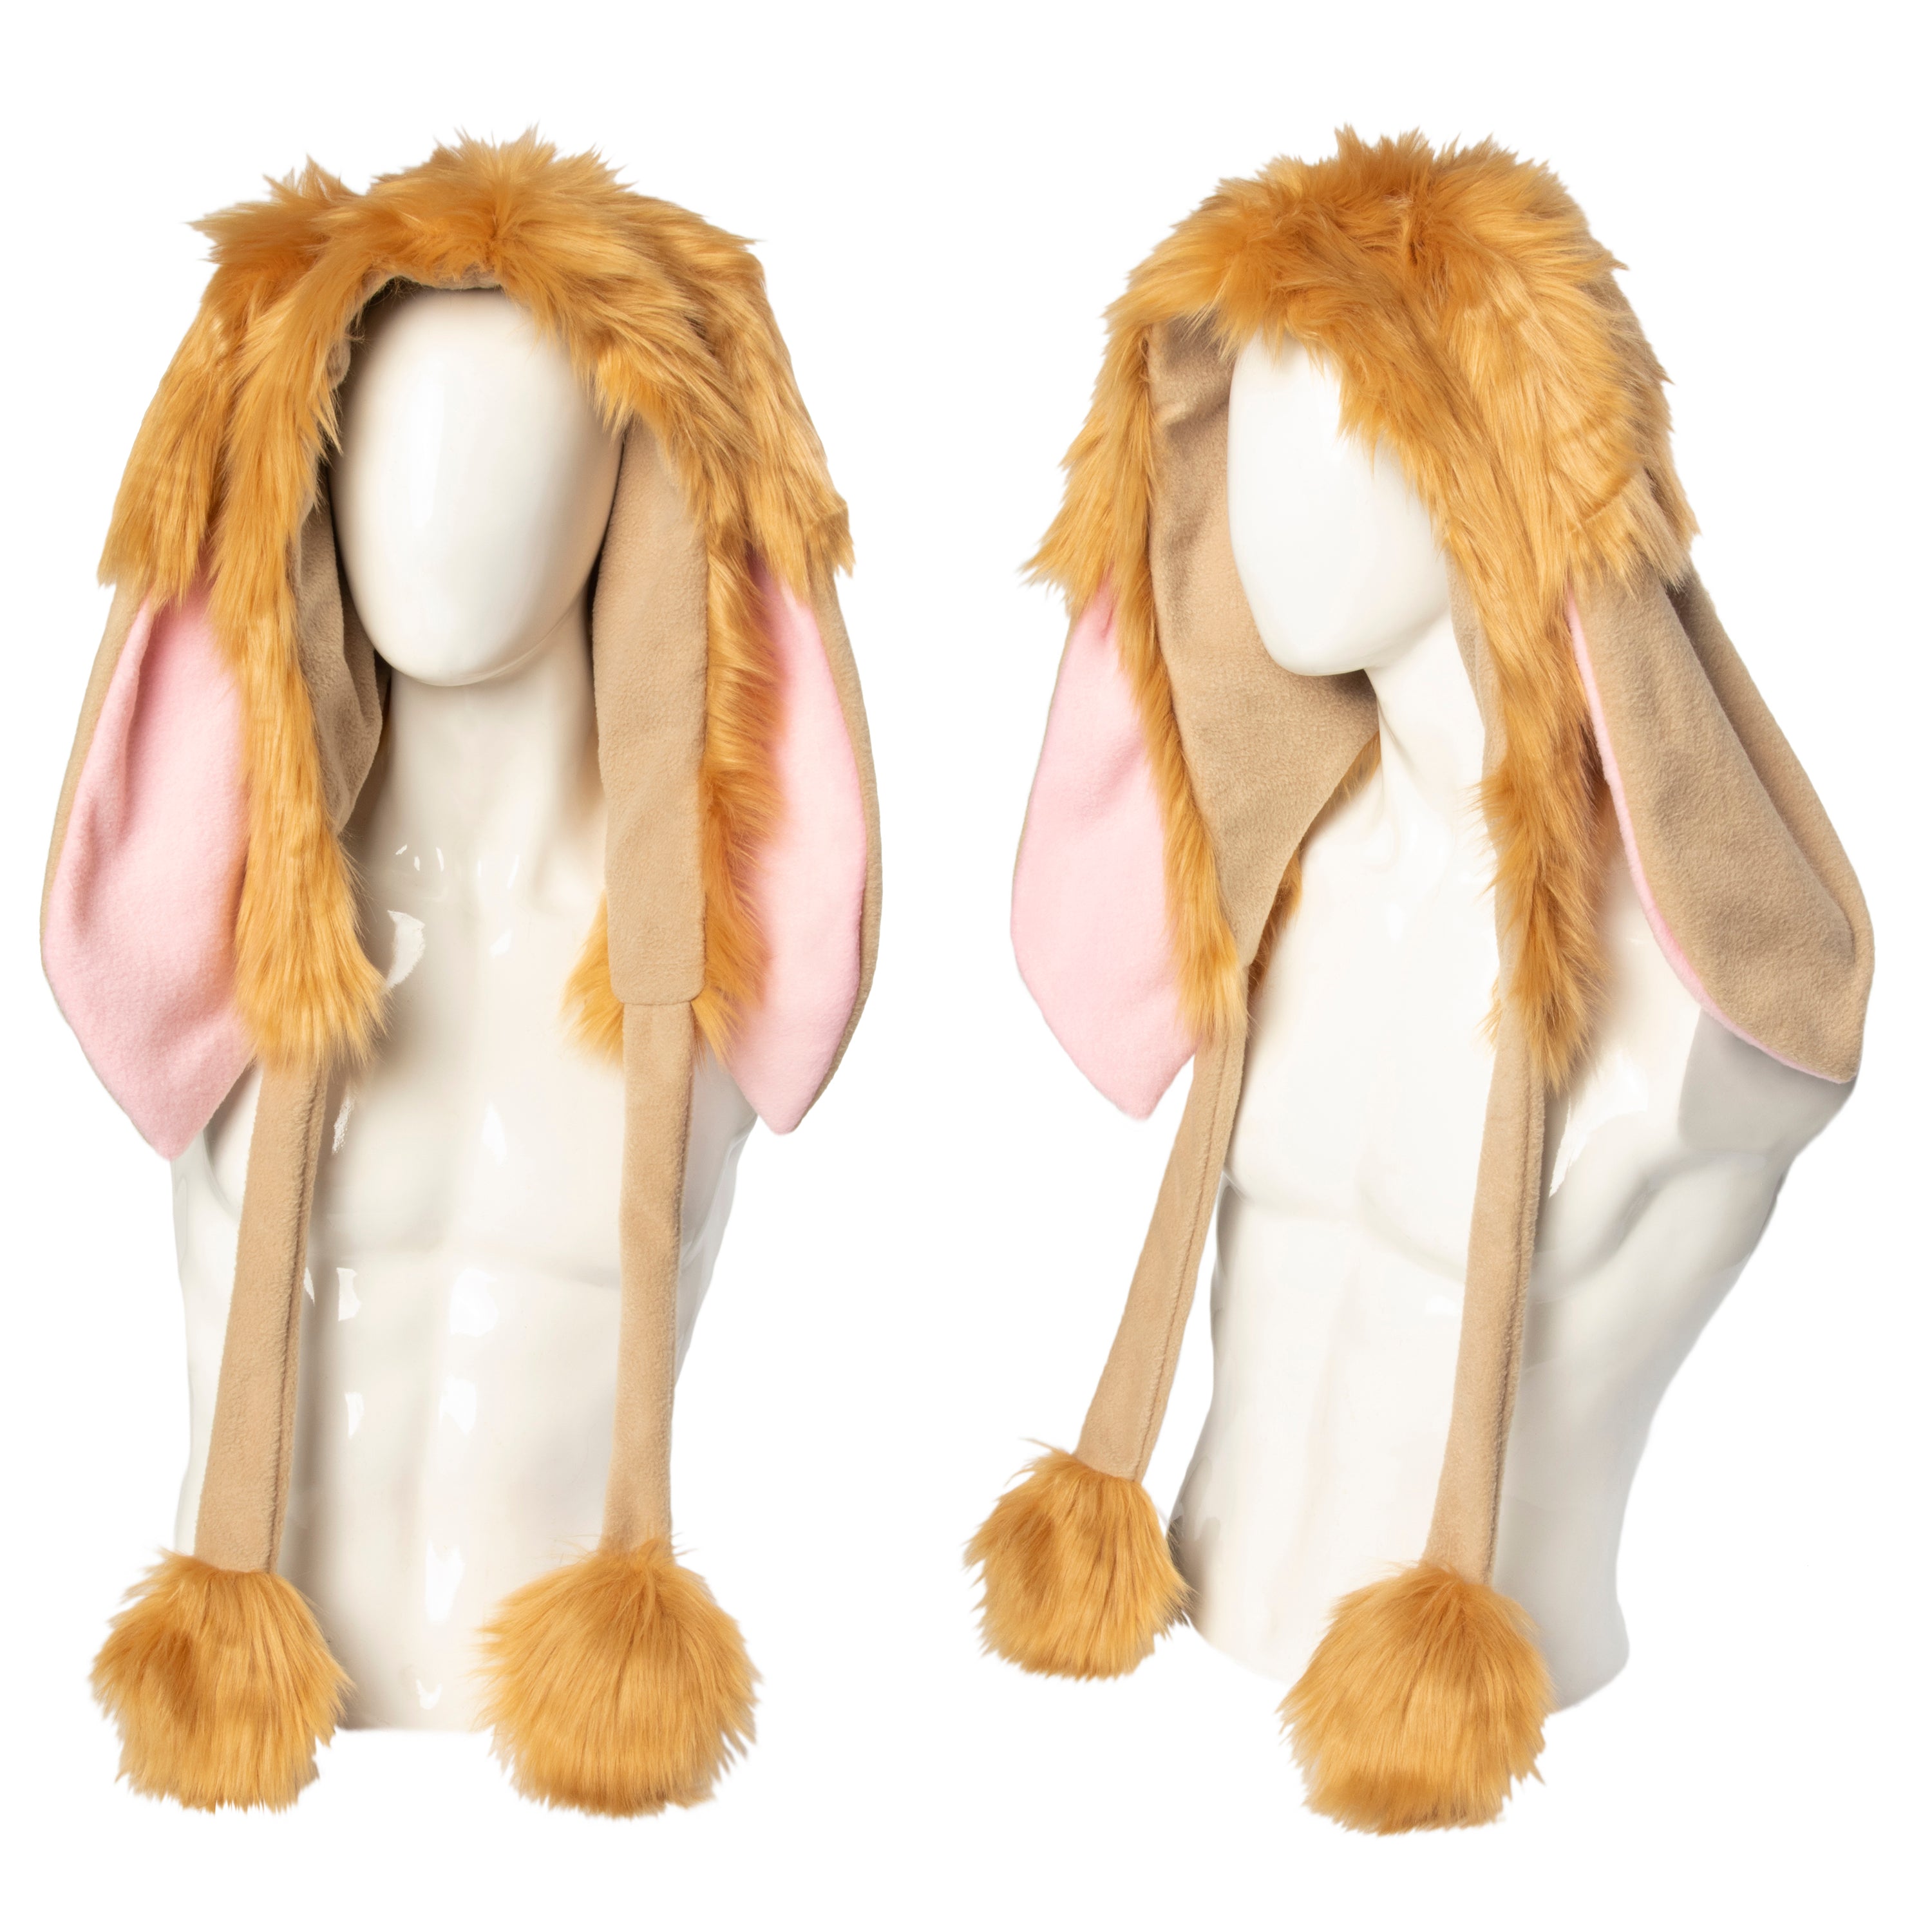 Bunny Nybble Puffet Hood - Pawstar Pawstar Hoods bunny, cosplay, costume, furry, hat, ship-15, ship-15day